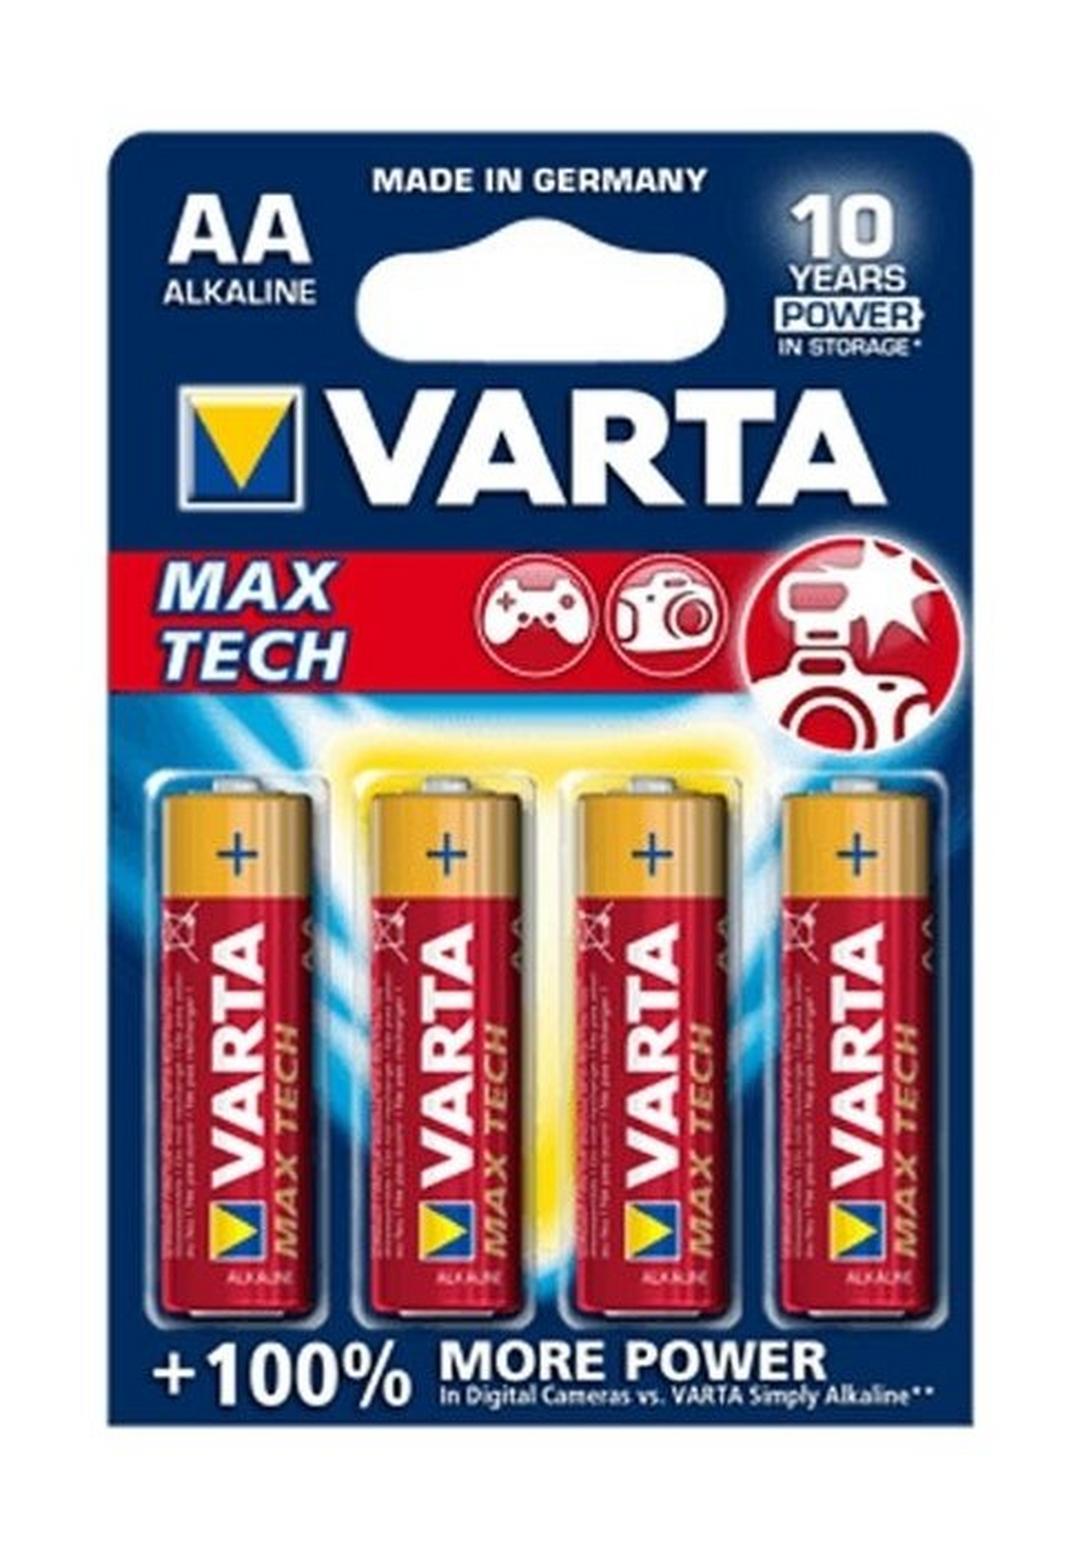 Varta MT 4 AA Max Tech Alkaline Battery - 4 Pcs